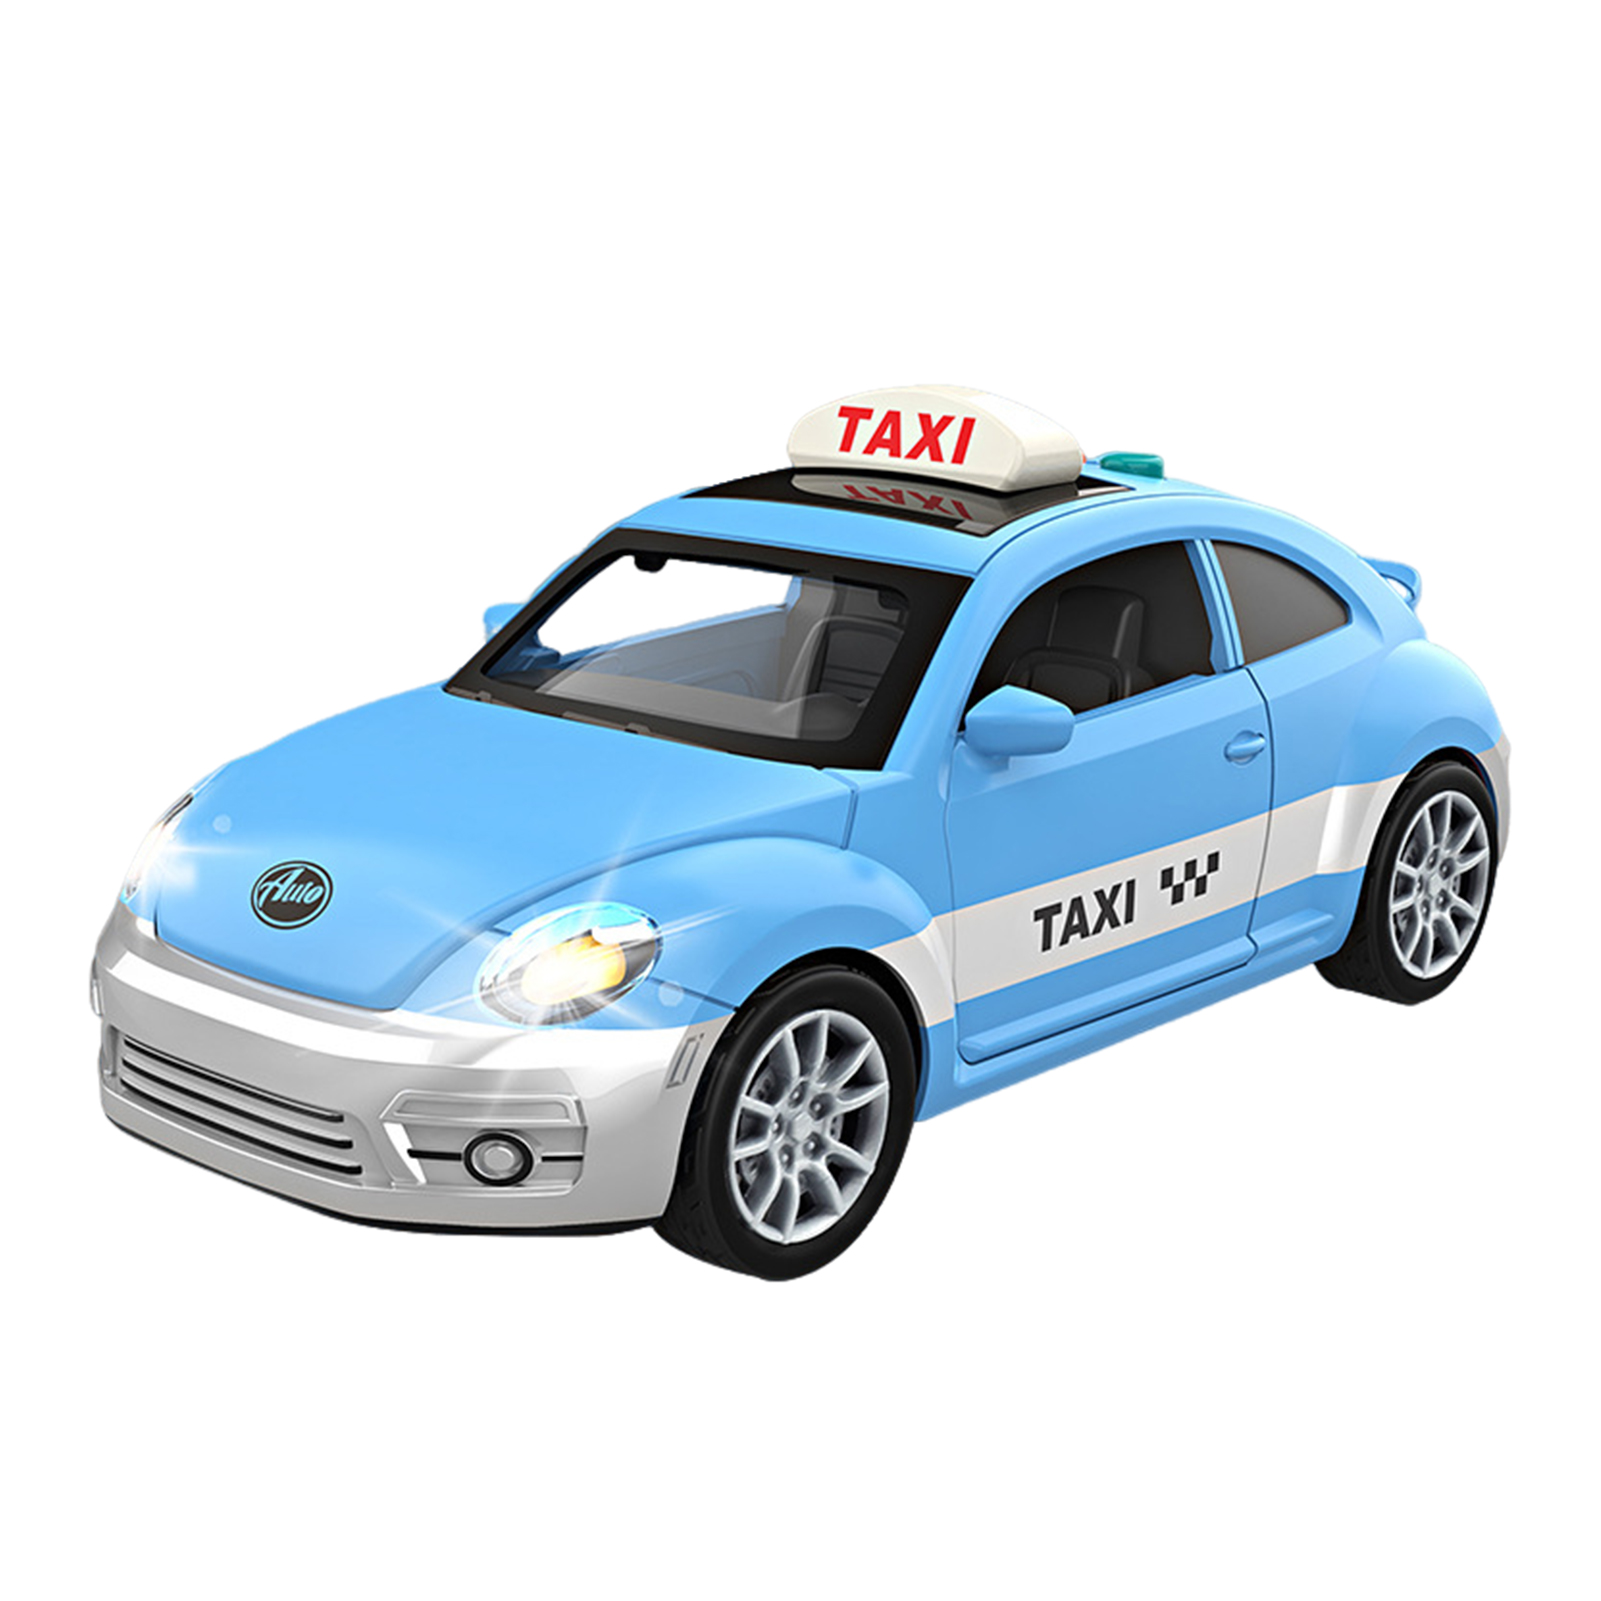 Enjoy toy Inertia Taxi Toy Double Doors Taxi Toy Fun and Festive Mini Taxi